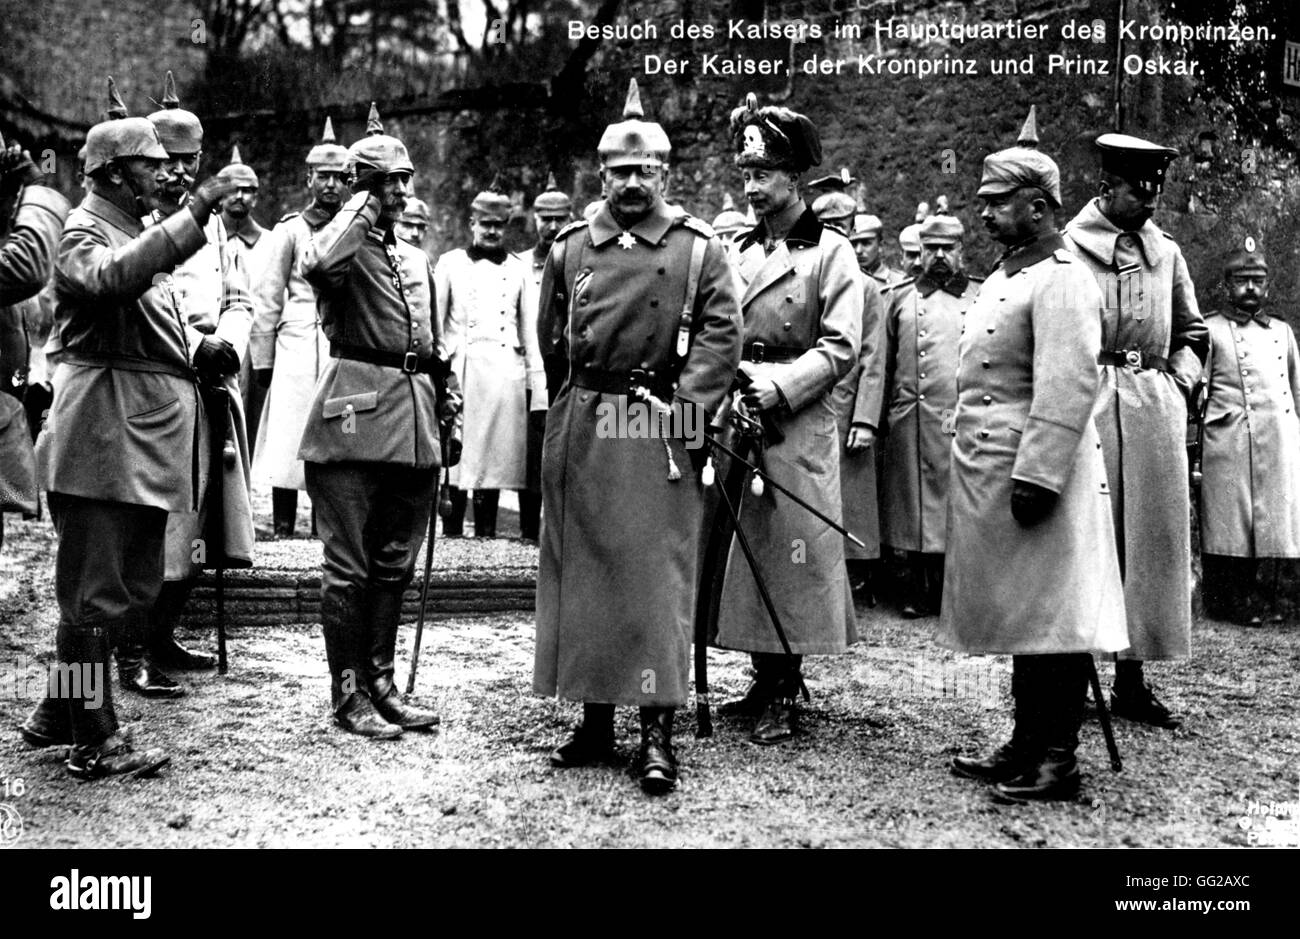 The Kaiser, the Kronprinz and Prince Oskar 1914 Germany - World War I Stock Photo